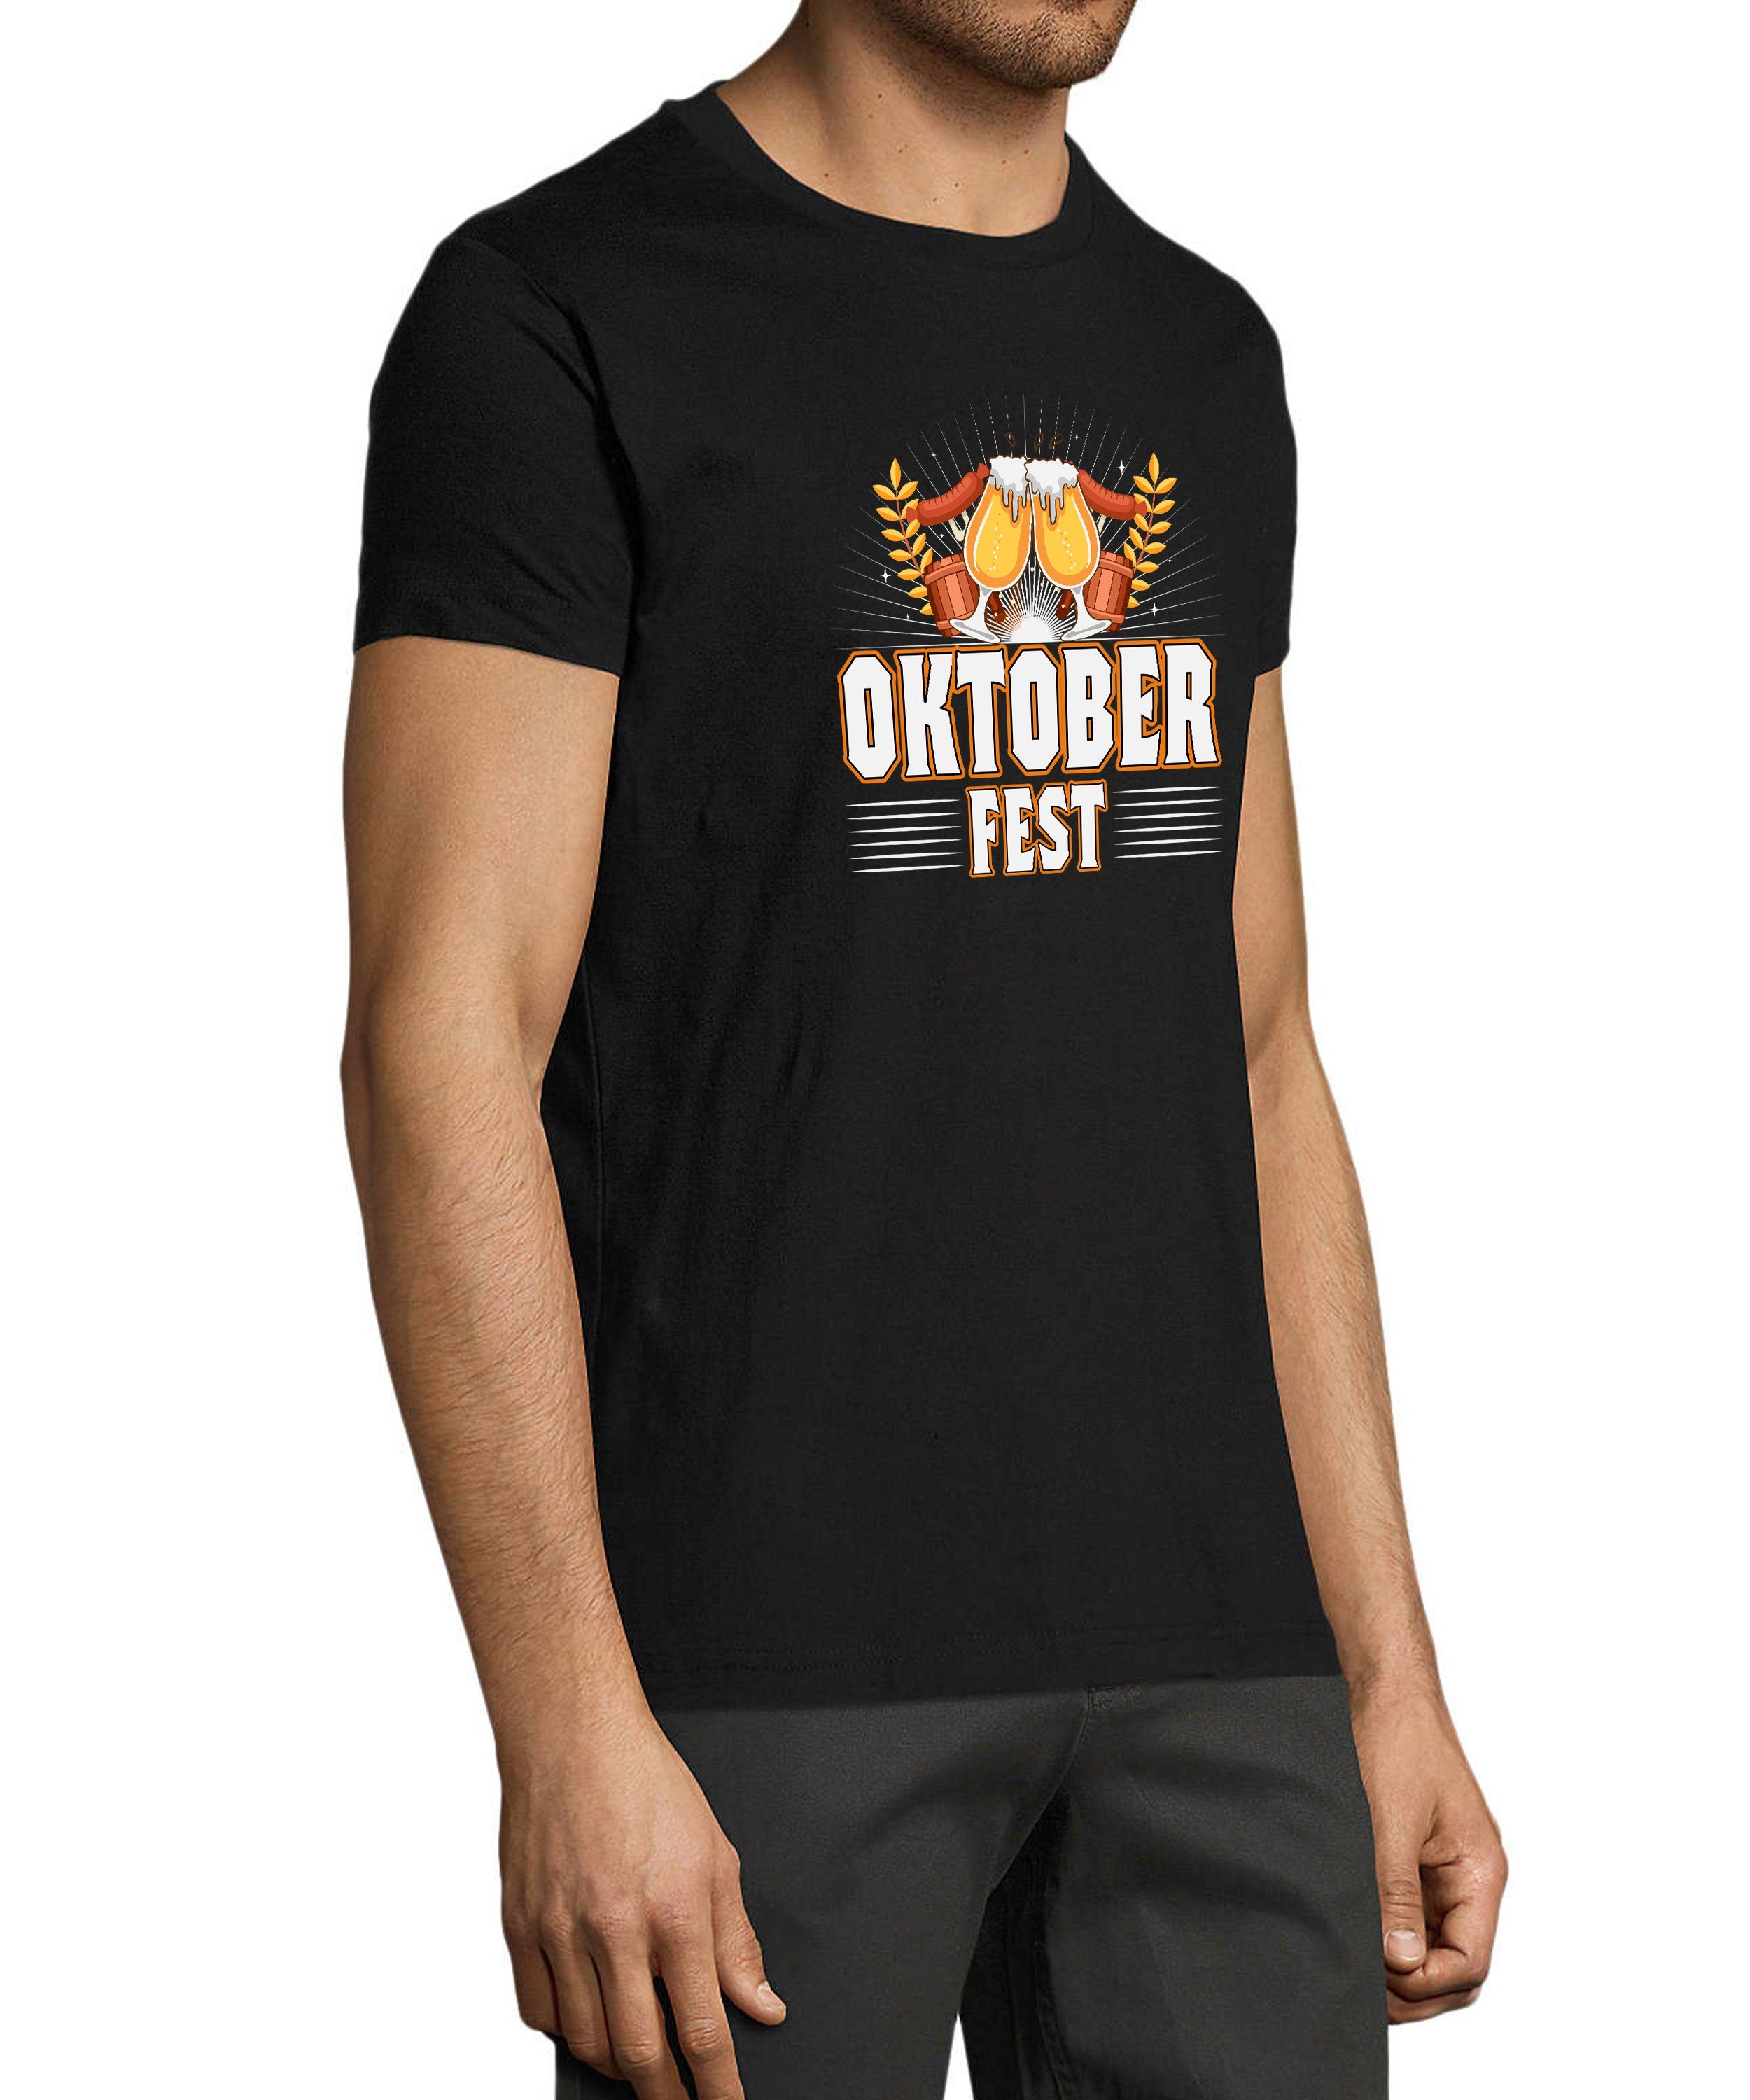 T-Shirt Regular schwarz Party Aufdruck mit Baumwollshirt MyDesign24 i327 Herren - Fit, Oktoberfest Shirt T-Shirt